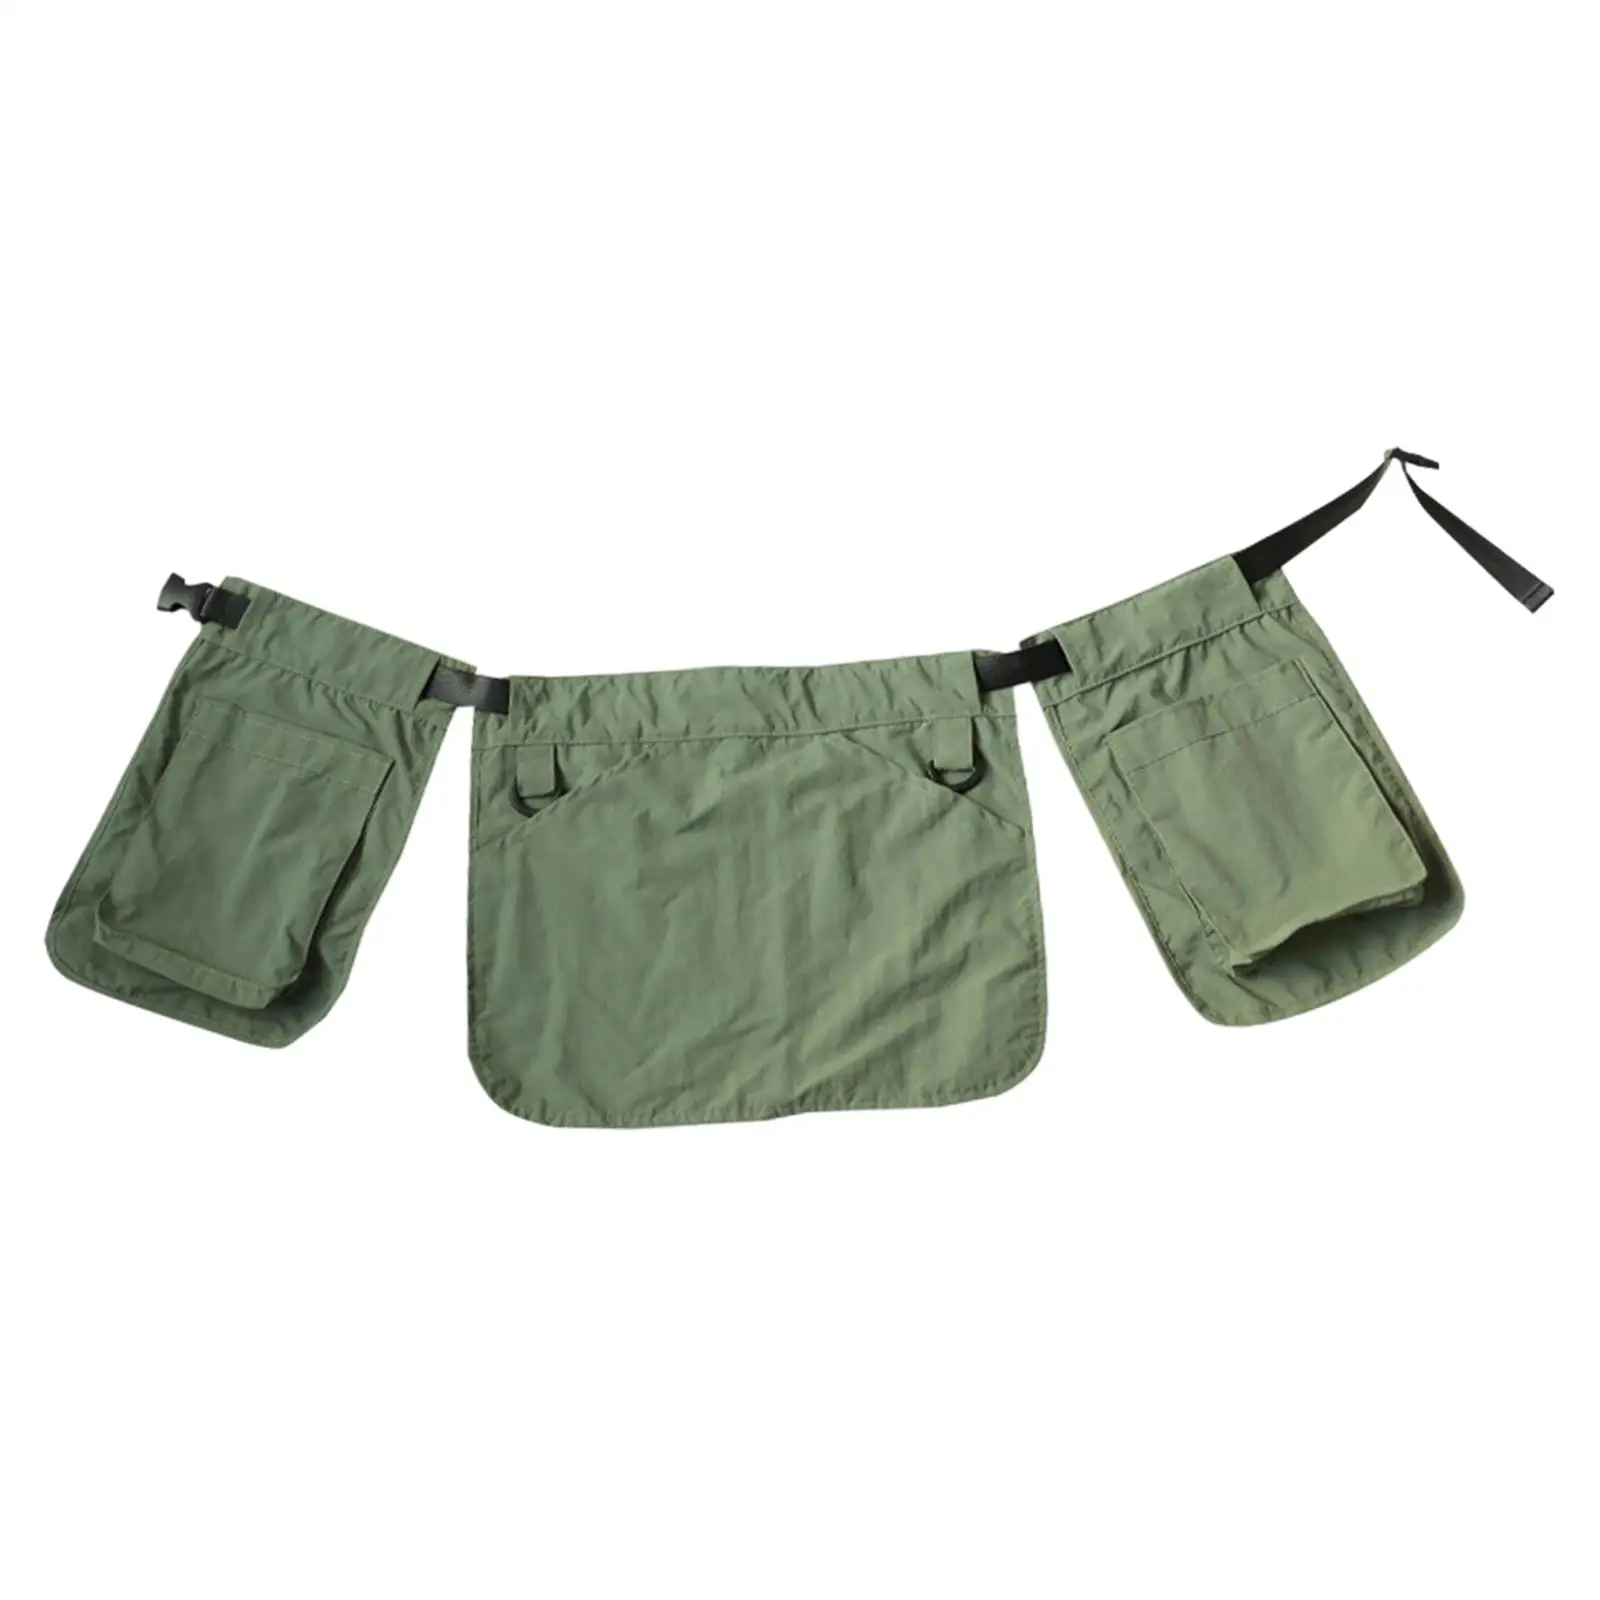 Waist Bag Adjustable Men Women Fanny Pack Fashionable Multi Pockets Waist Apron for Travel Workout Hiking Walking Outdoor Sports